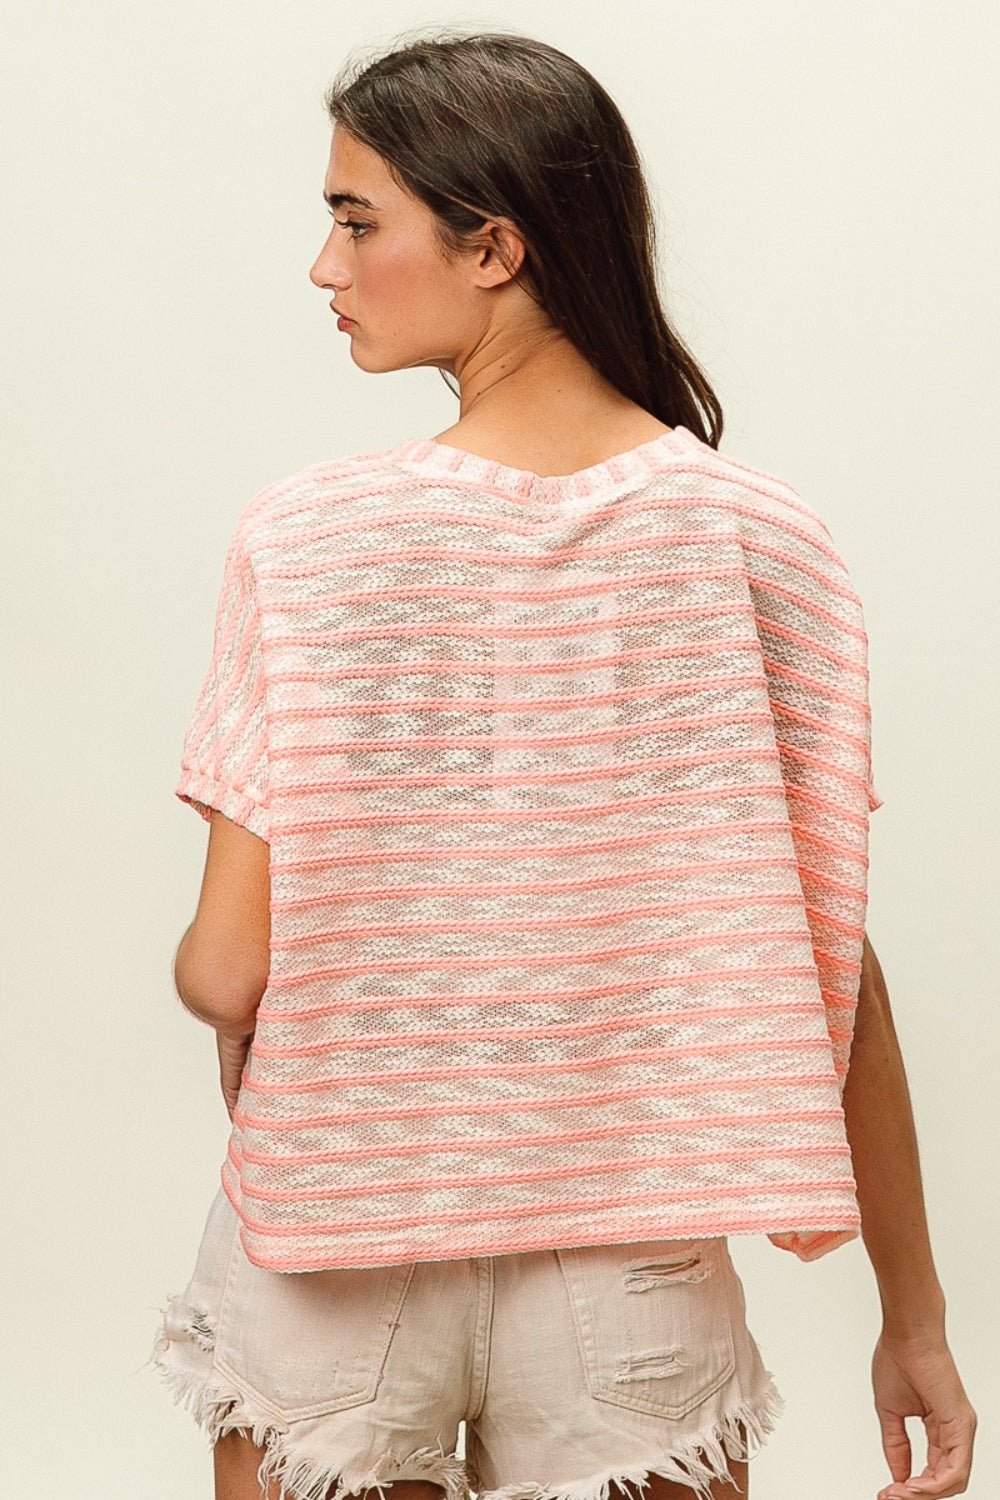 Striped Short Sleeve Crew Neck T-Shirt in PinkT-ShirtBiBi